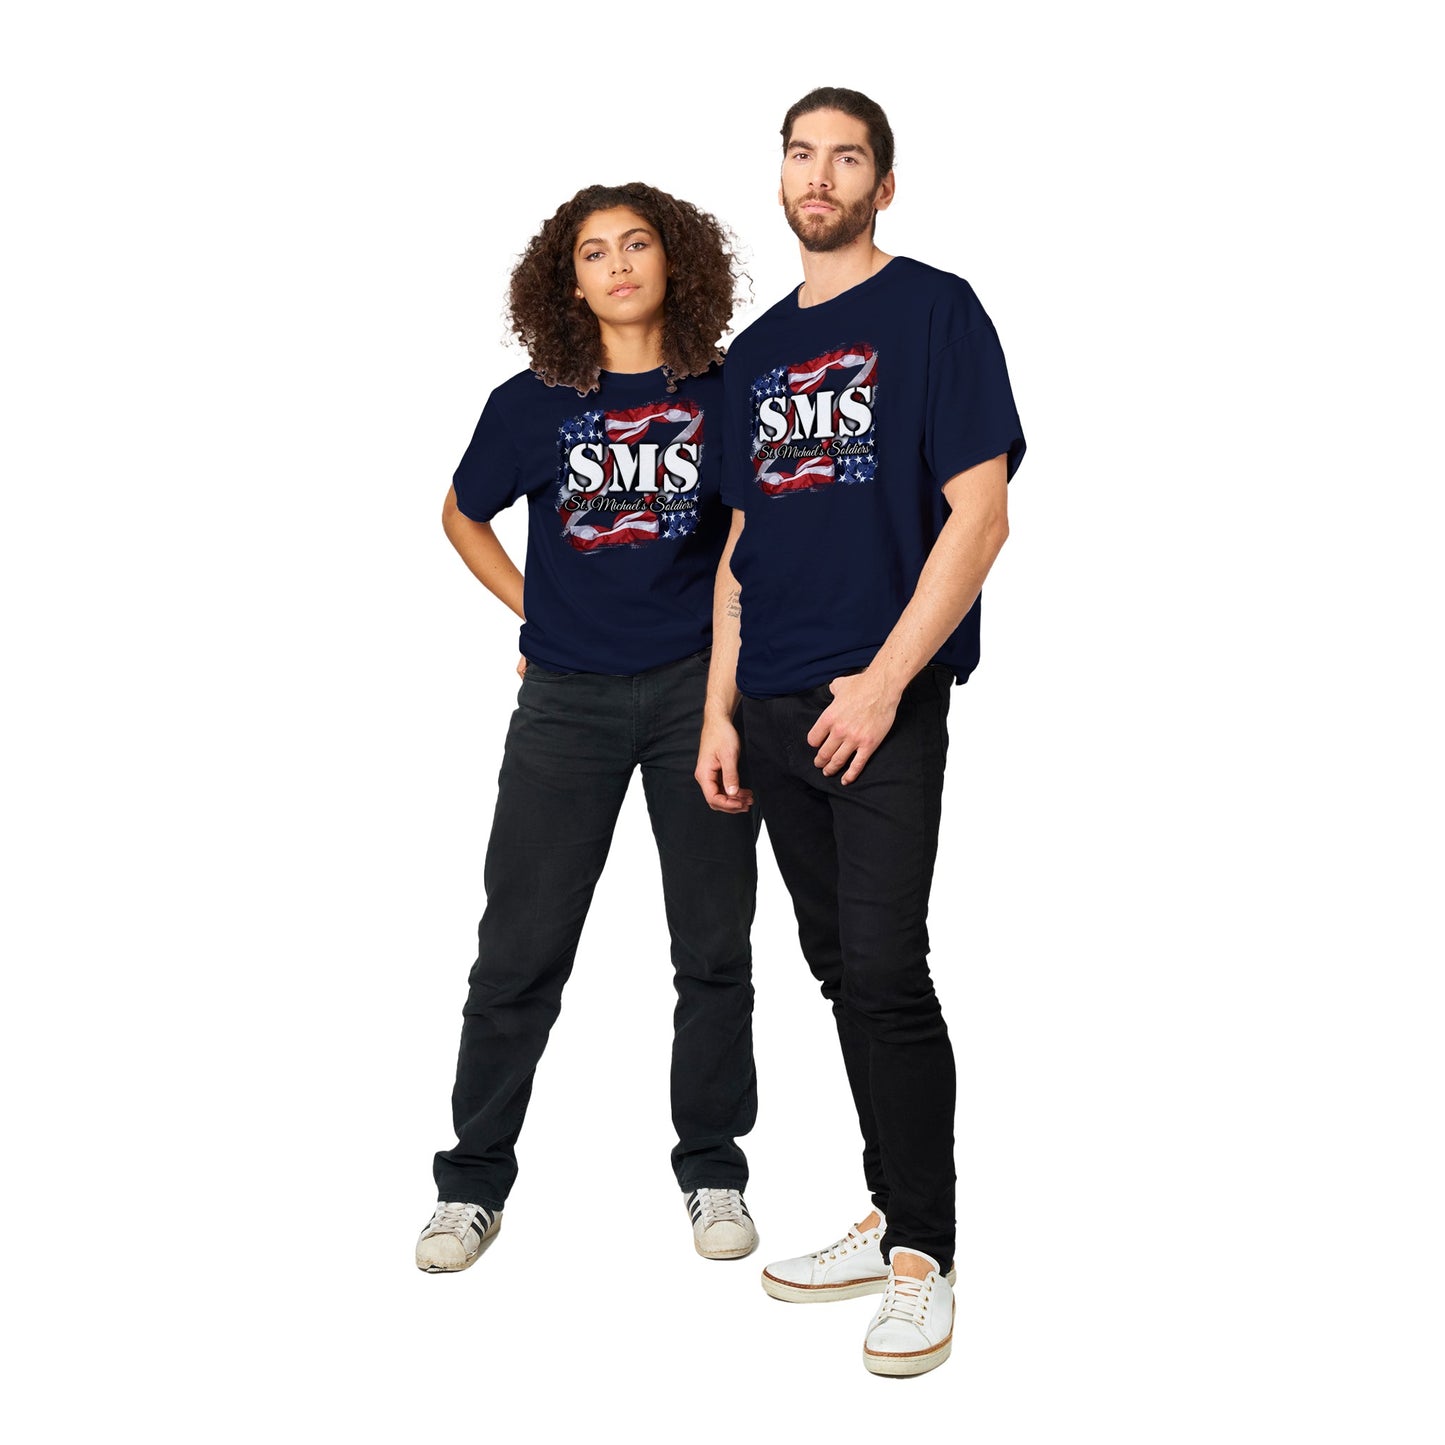 SMS (Flag1) Heavyweight Unisex Crewneck T-shirt